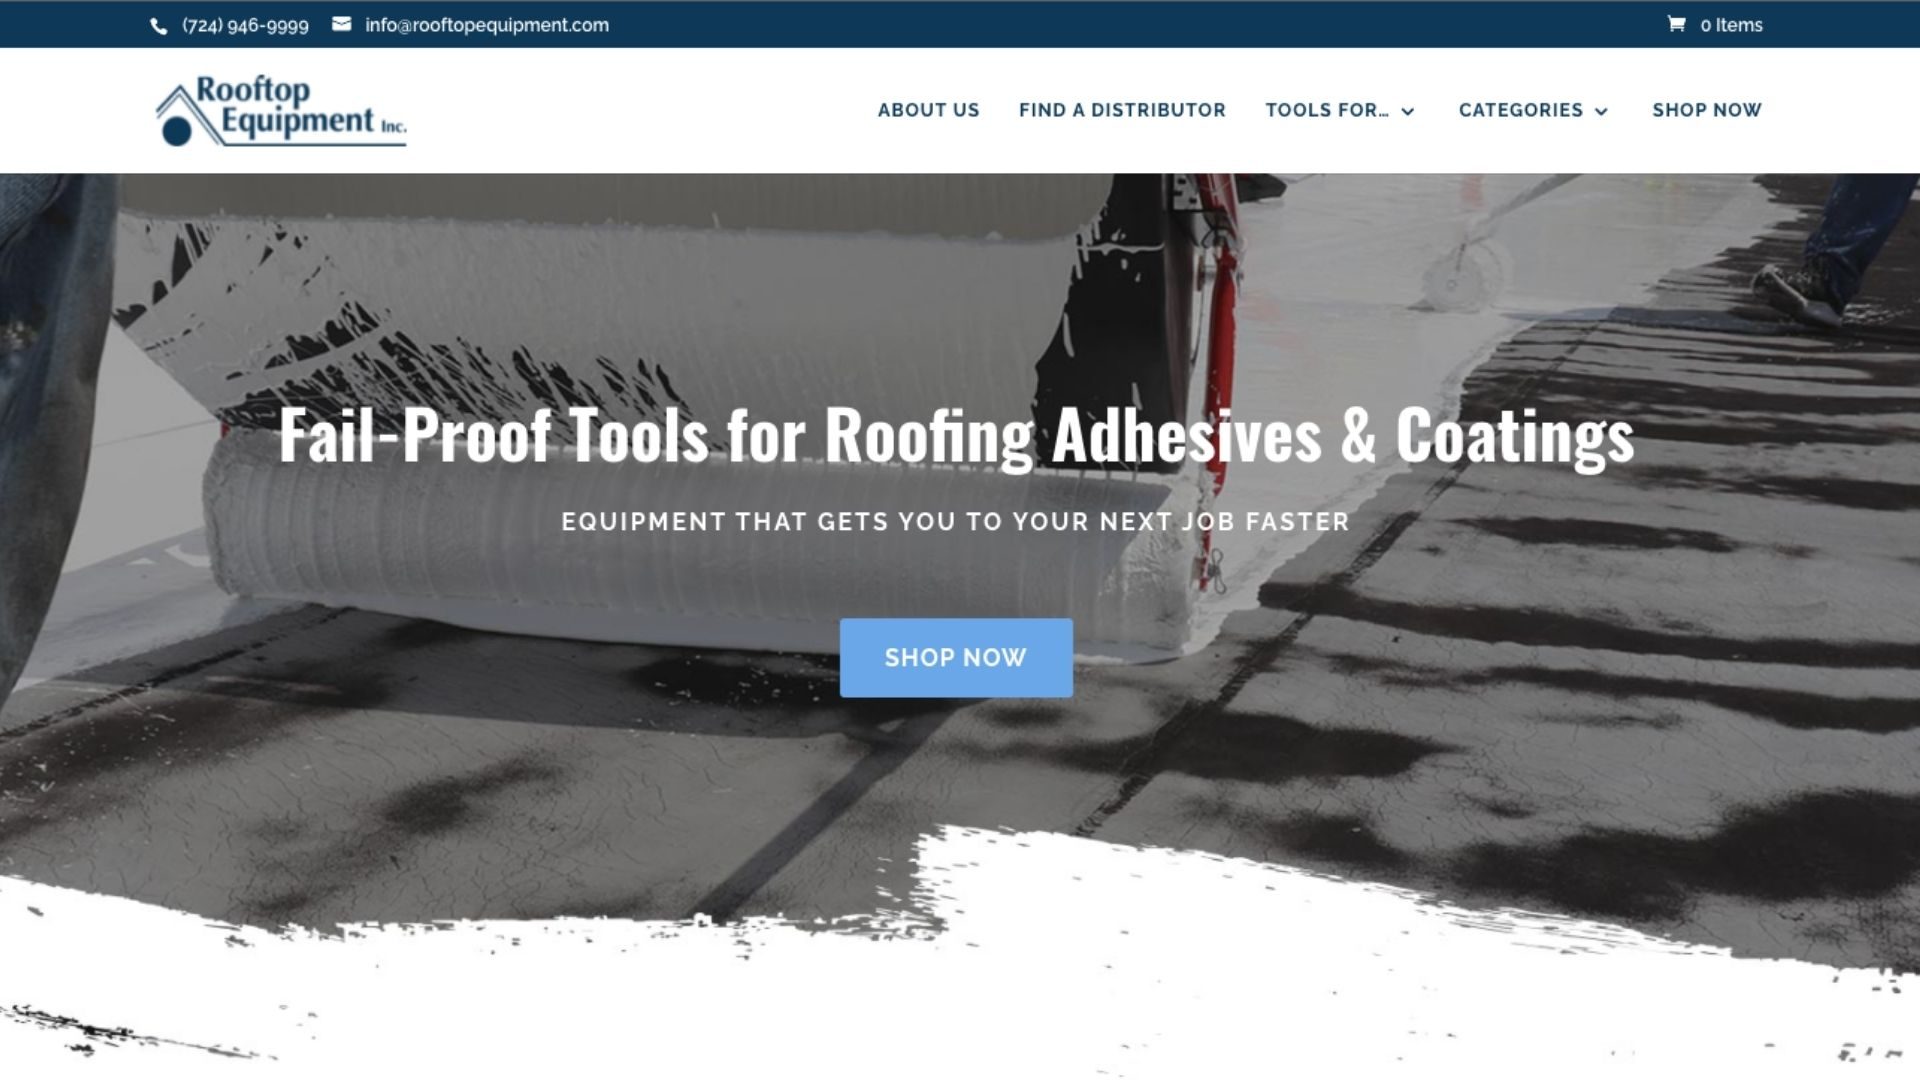 Rooftop Equipment Inc. StoryBrand Website